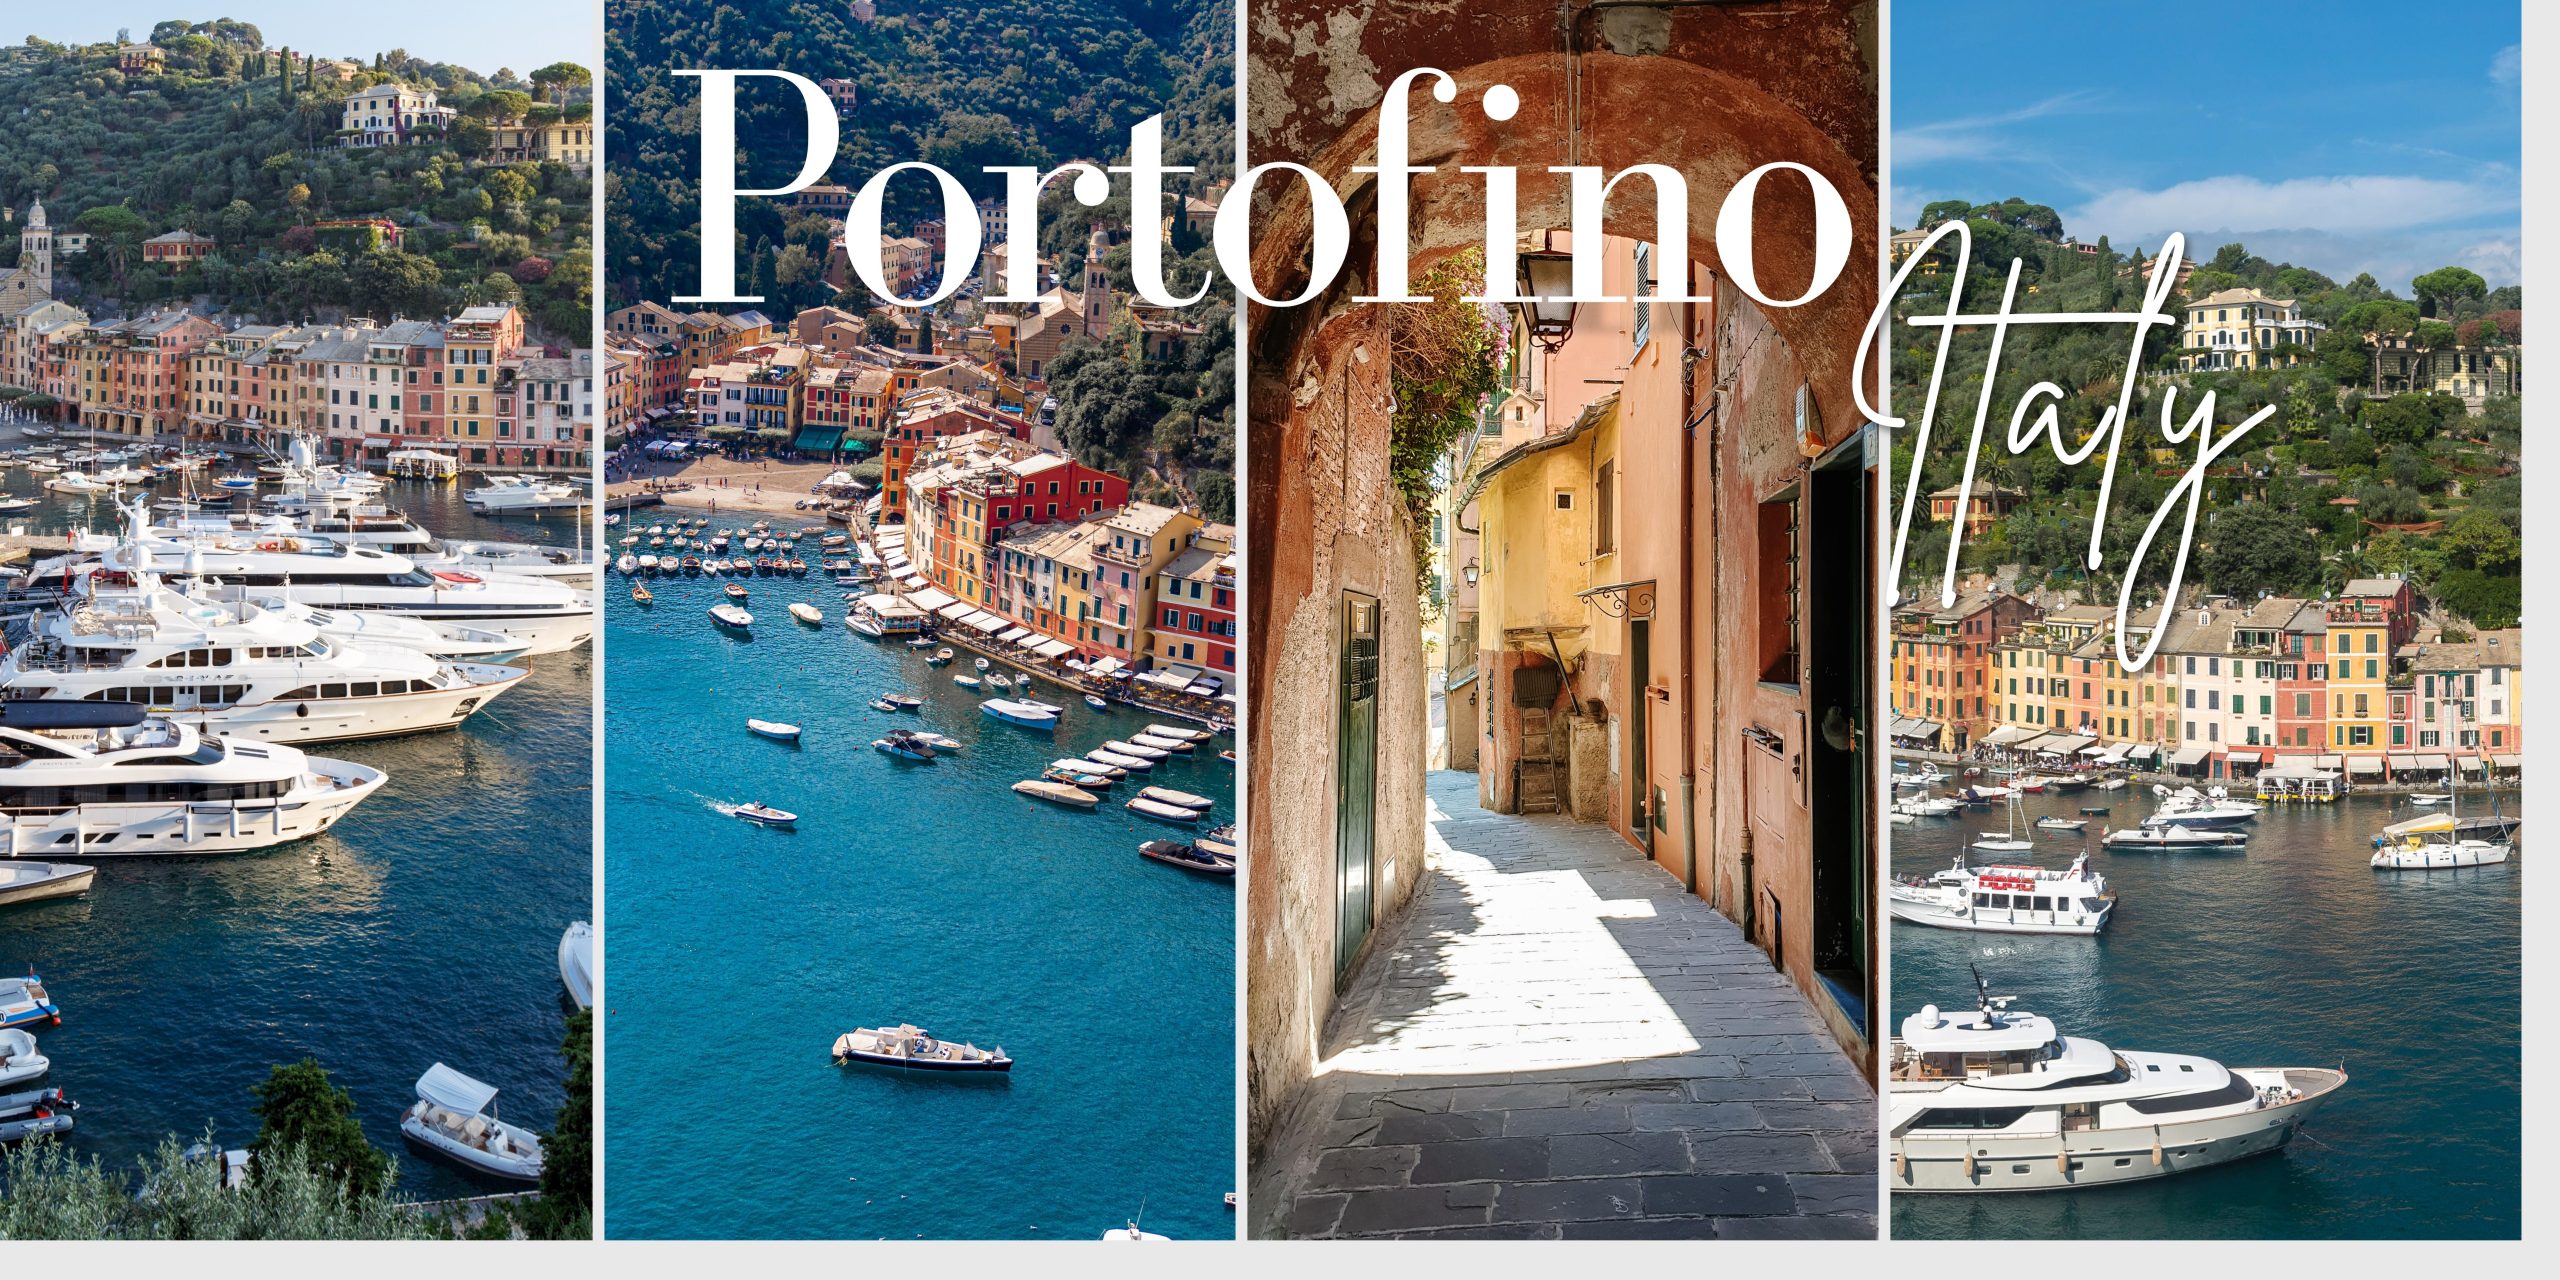 Portofino in Italy Beautiful places to visit